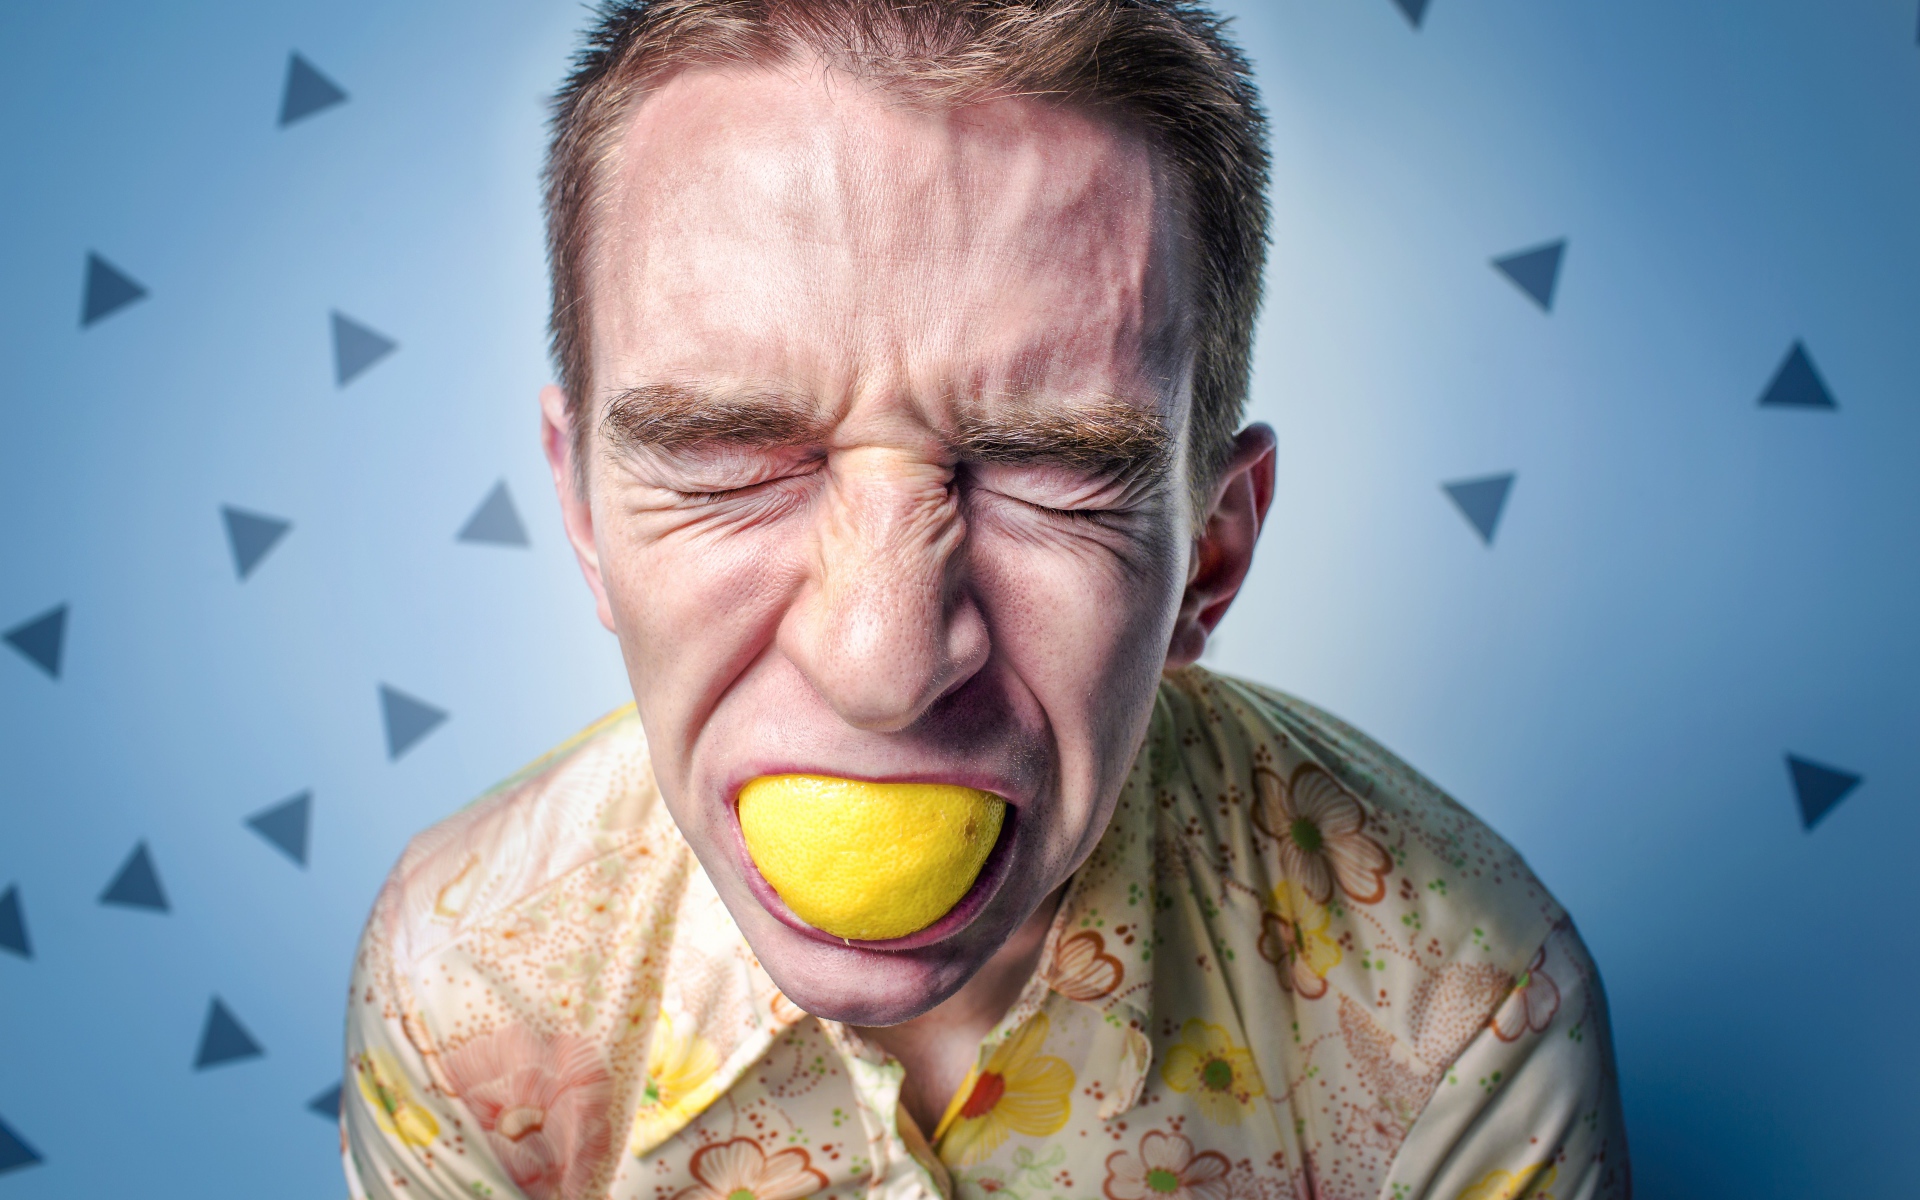 Man with closed eyes eating lemon